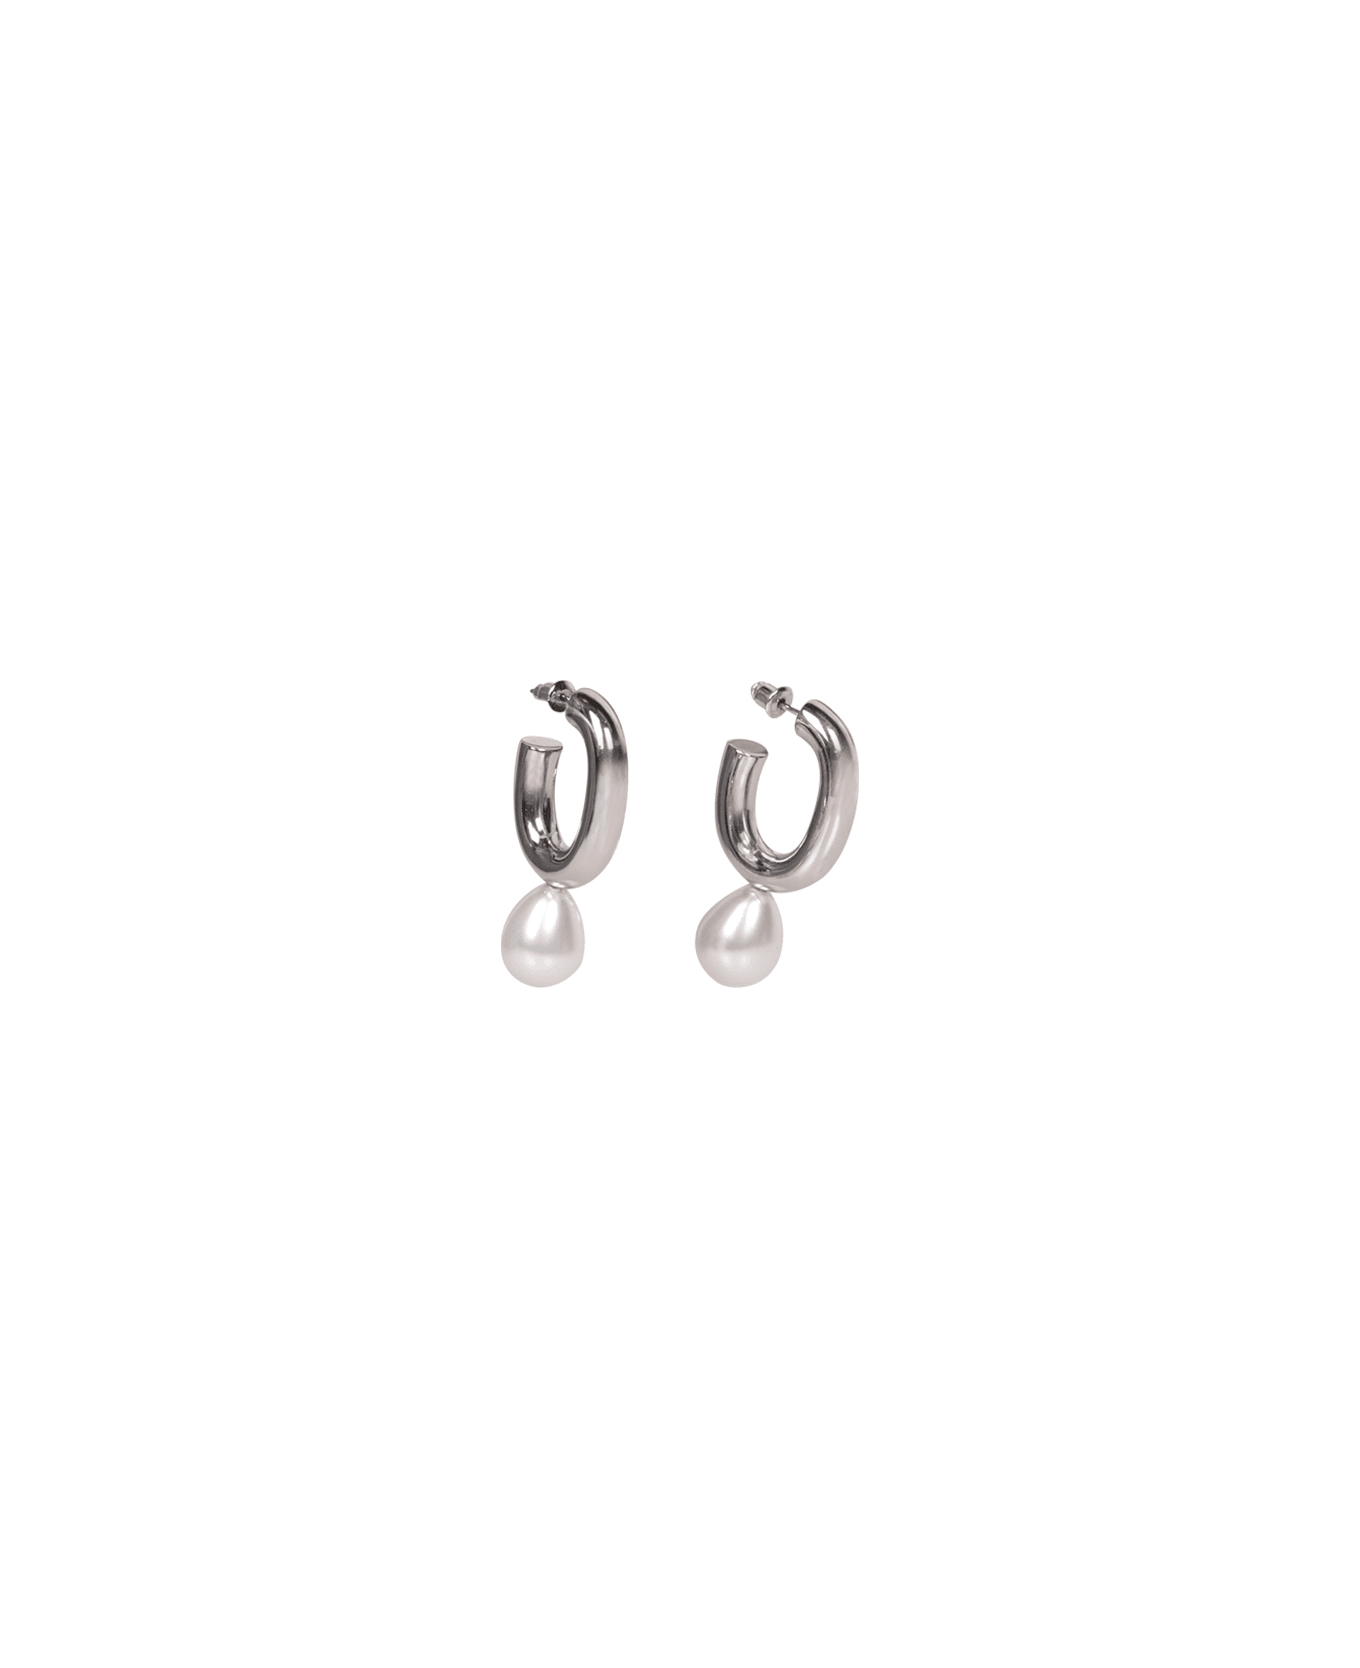 Simone Rocha Silver Pearl Hoop Earrings - Metallic